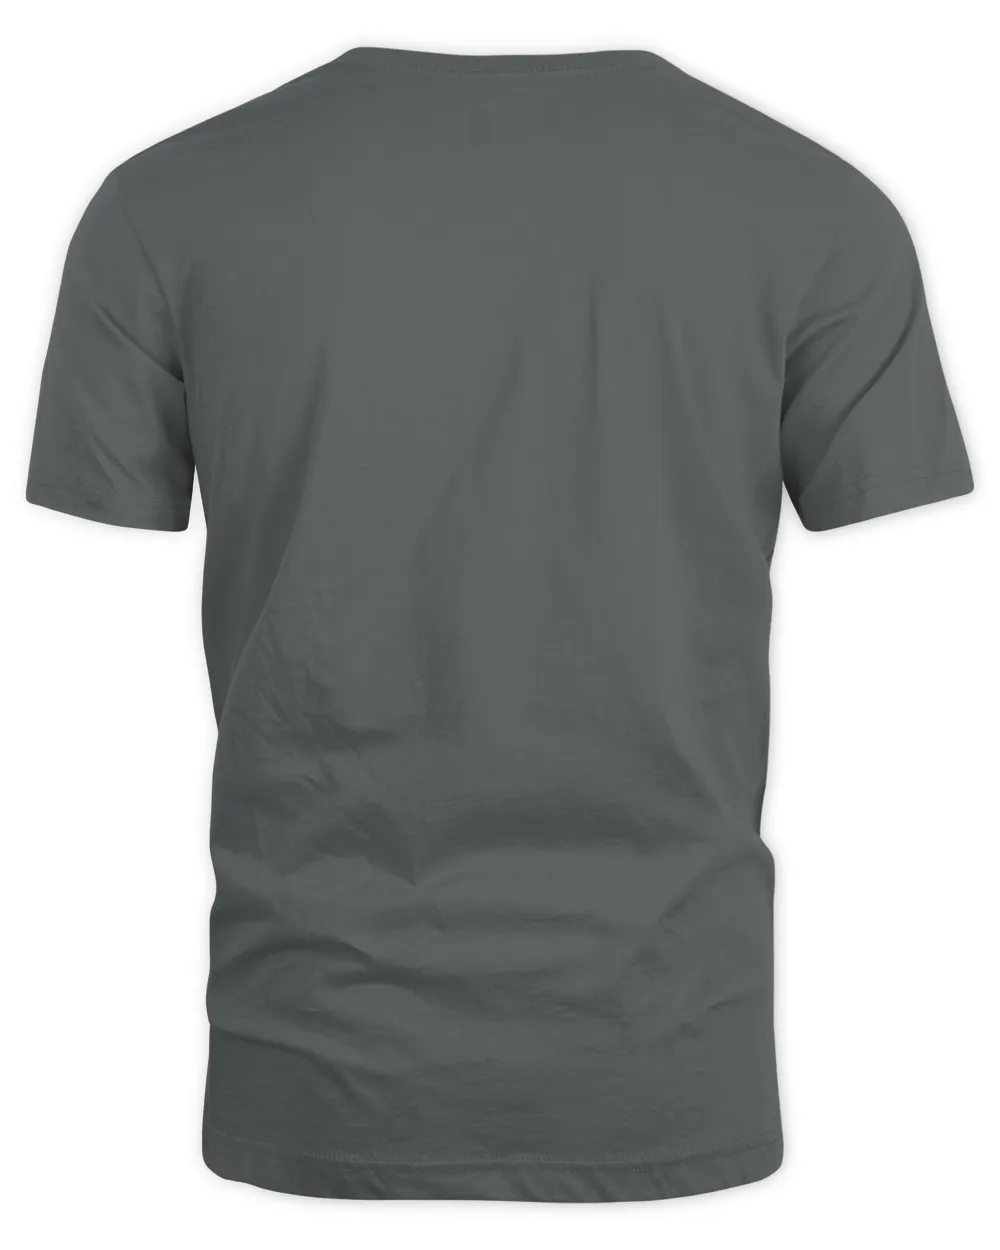 Volleyball LLam  T-Shirt